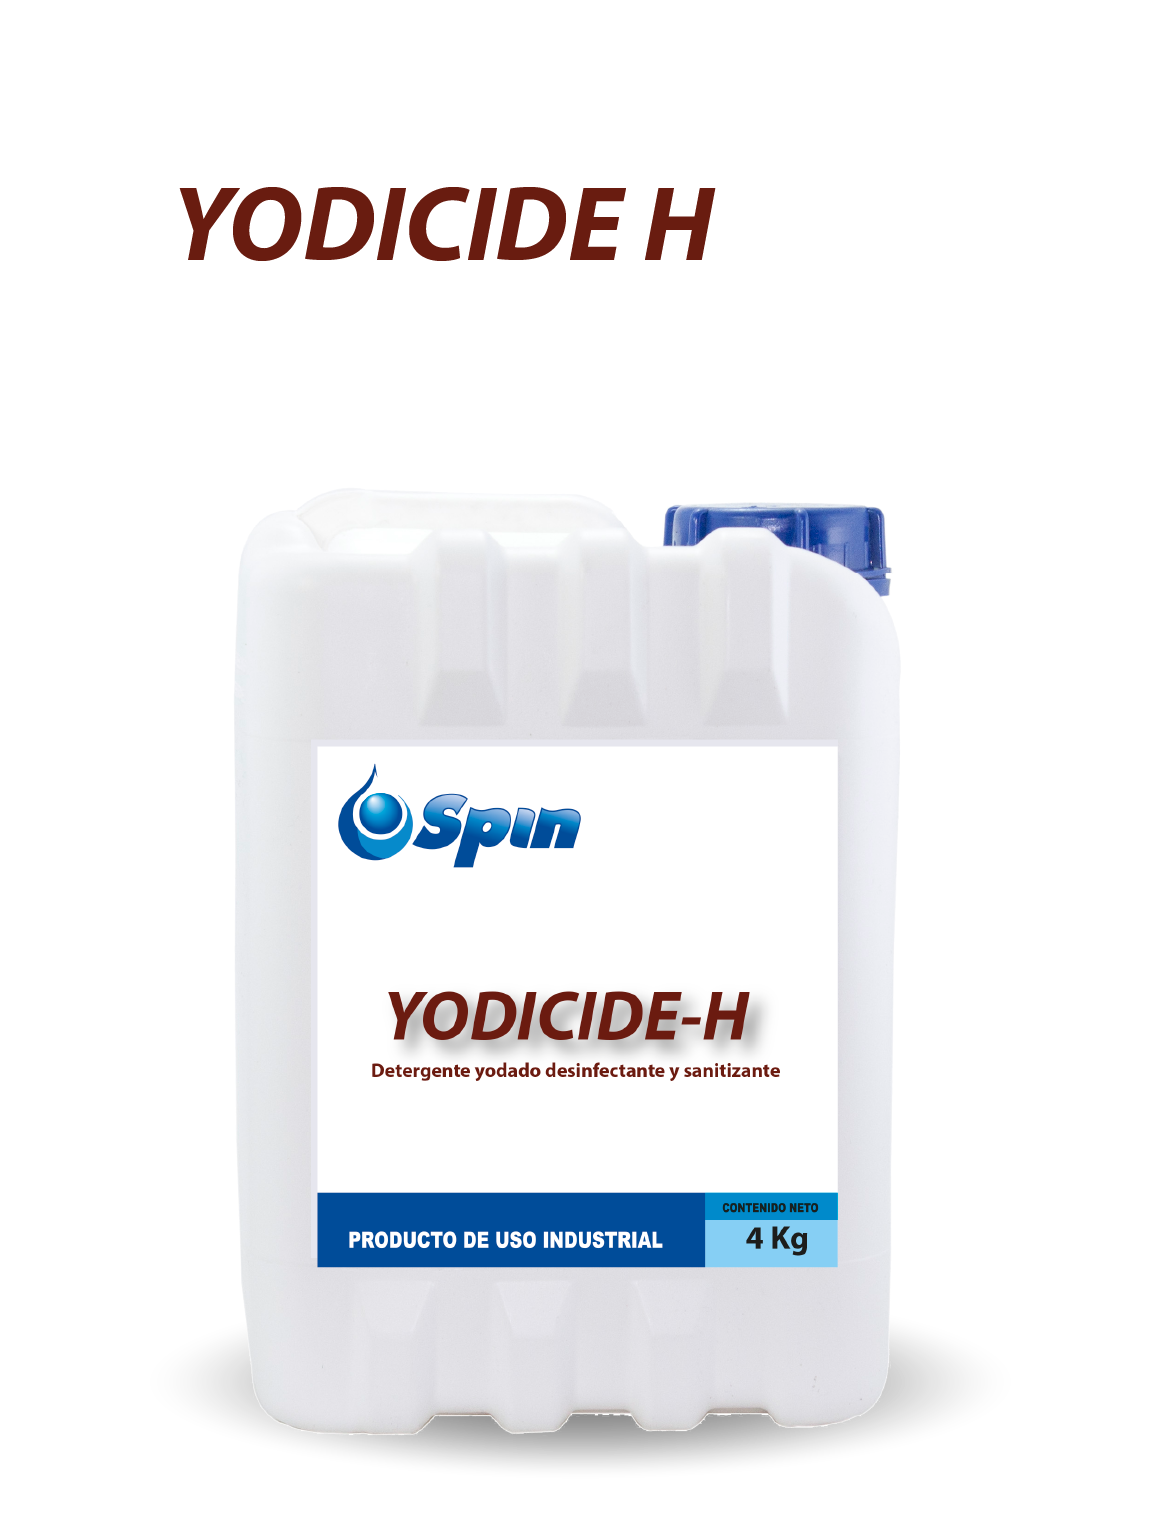 YODICIDE H